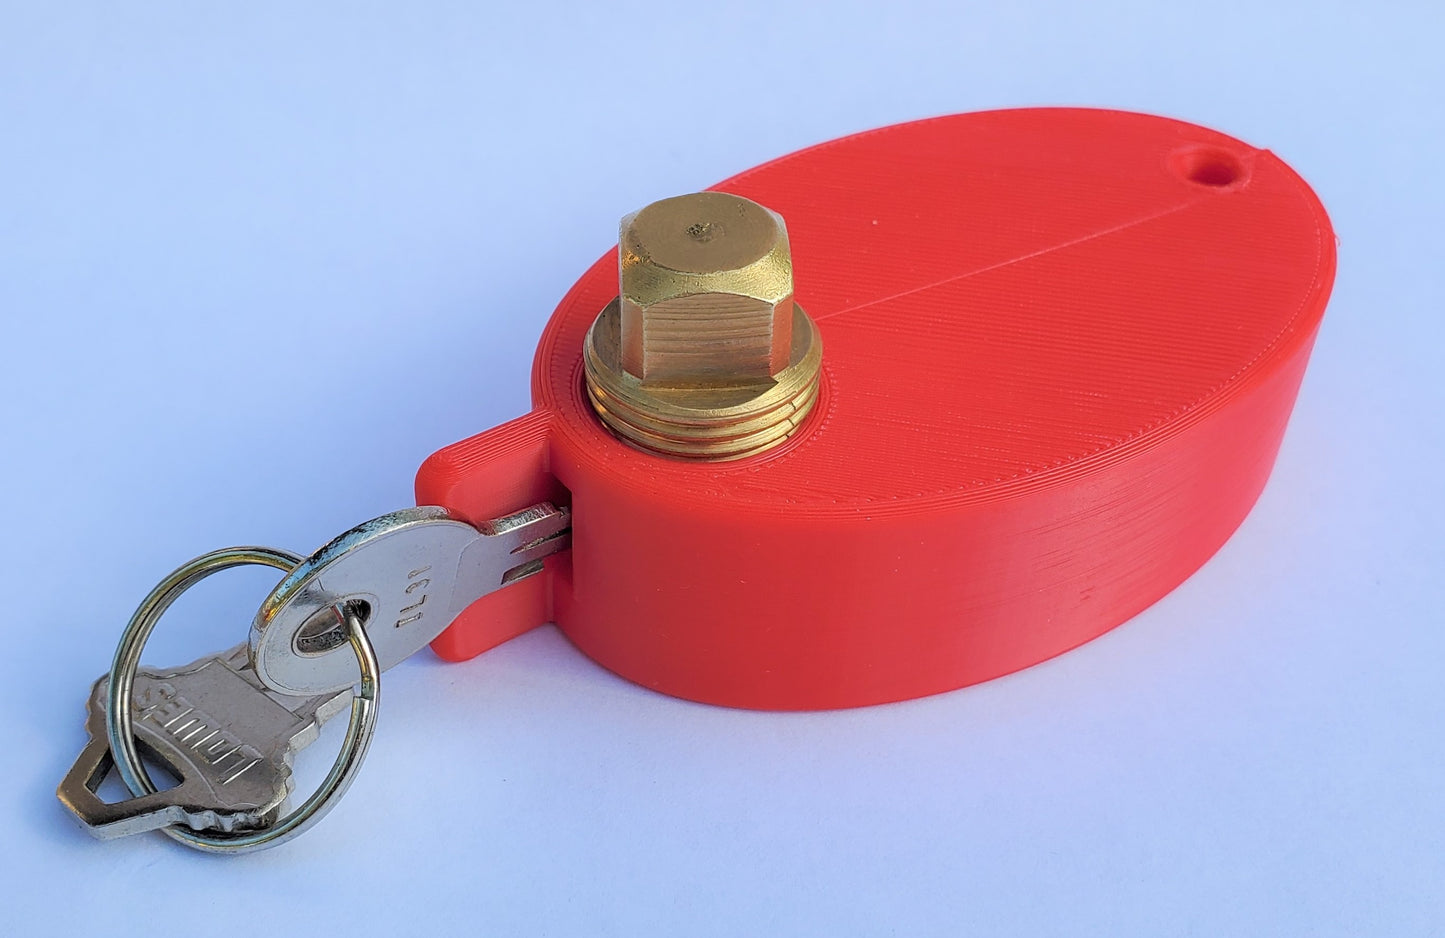 PlugKeyper Plug Float - red - boat drain plug reminder - key float - locks key in device using plug